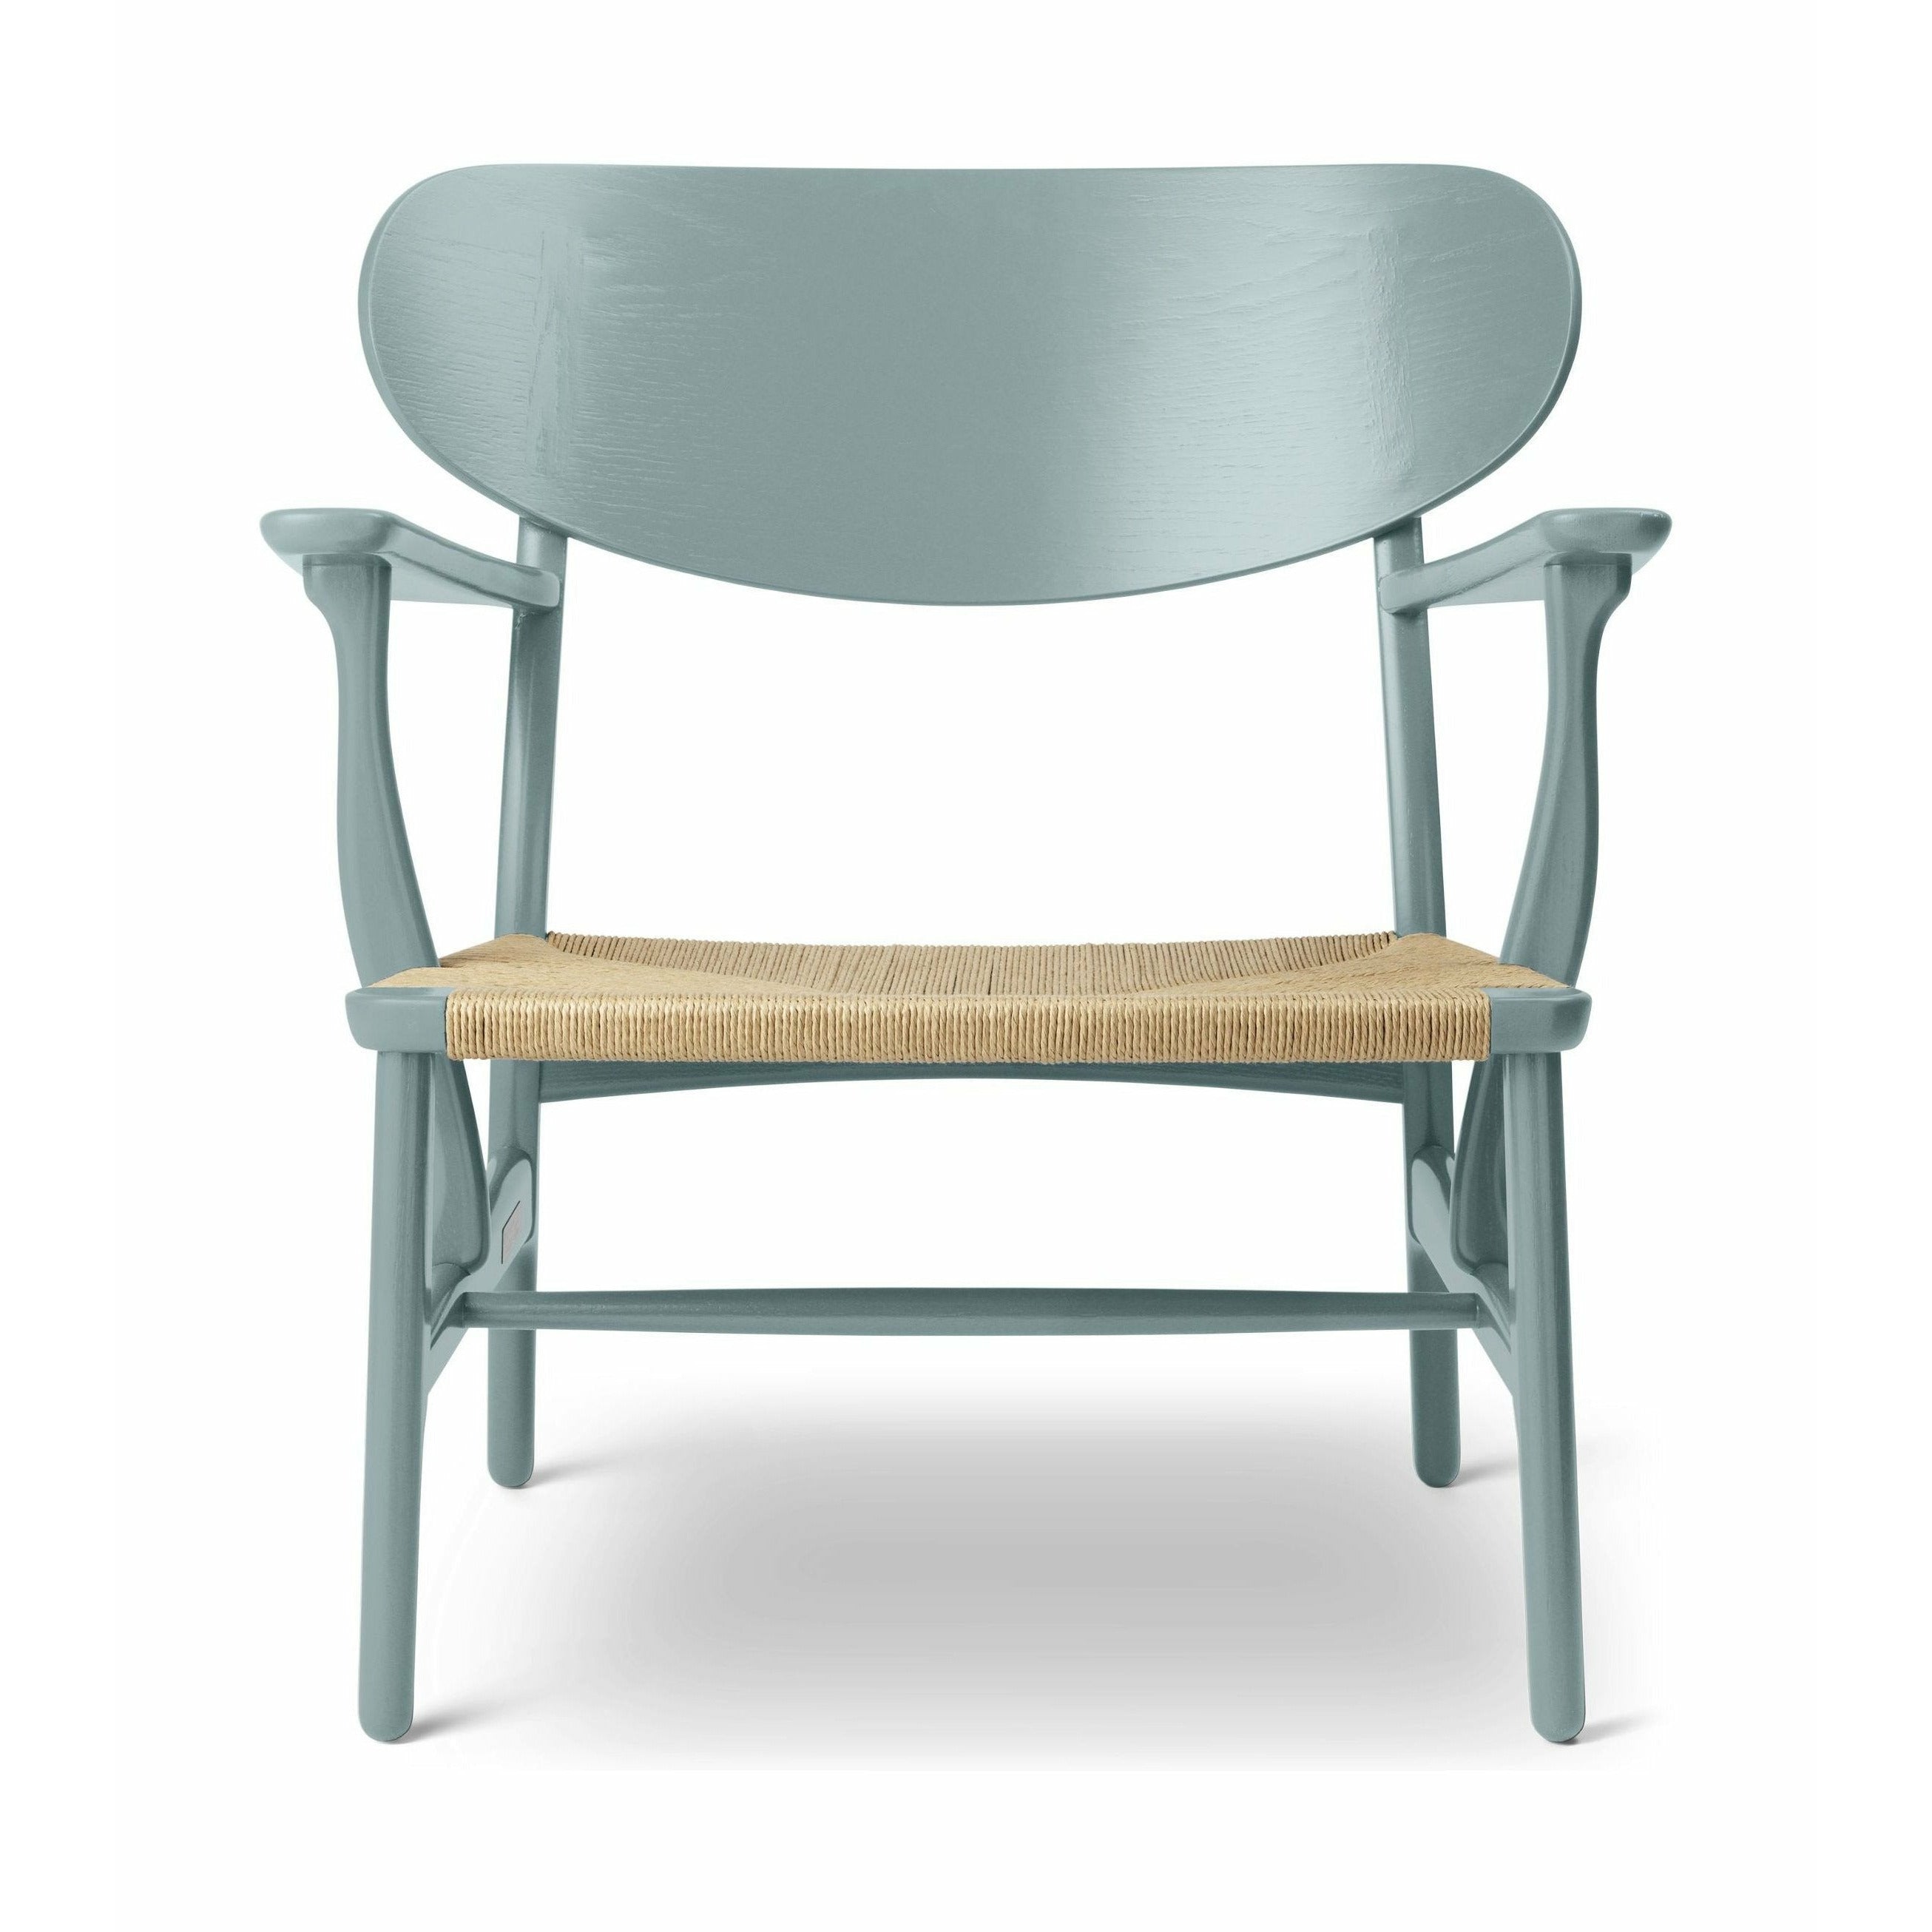 Carl Hansen Ch22 Lounge Chair Oak, Pewter Blue/Natural Wicker